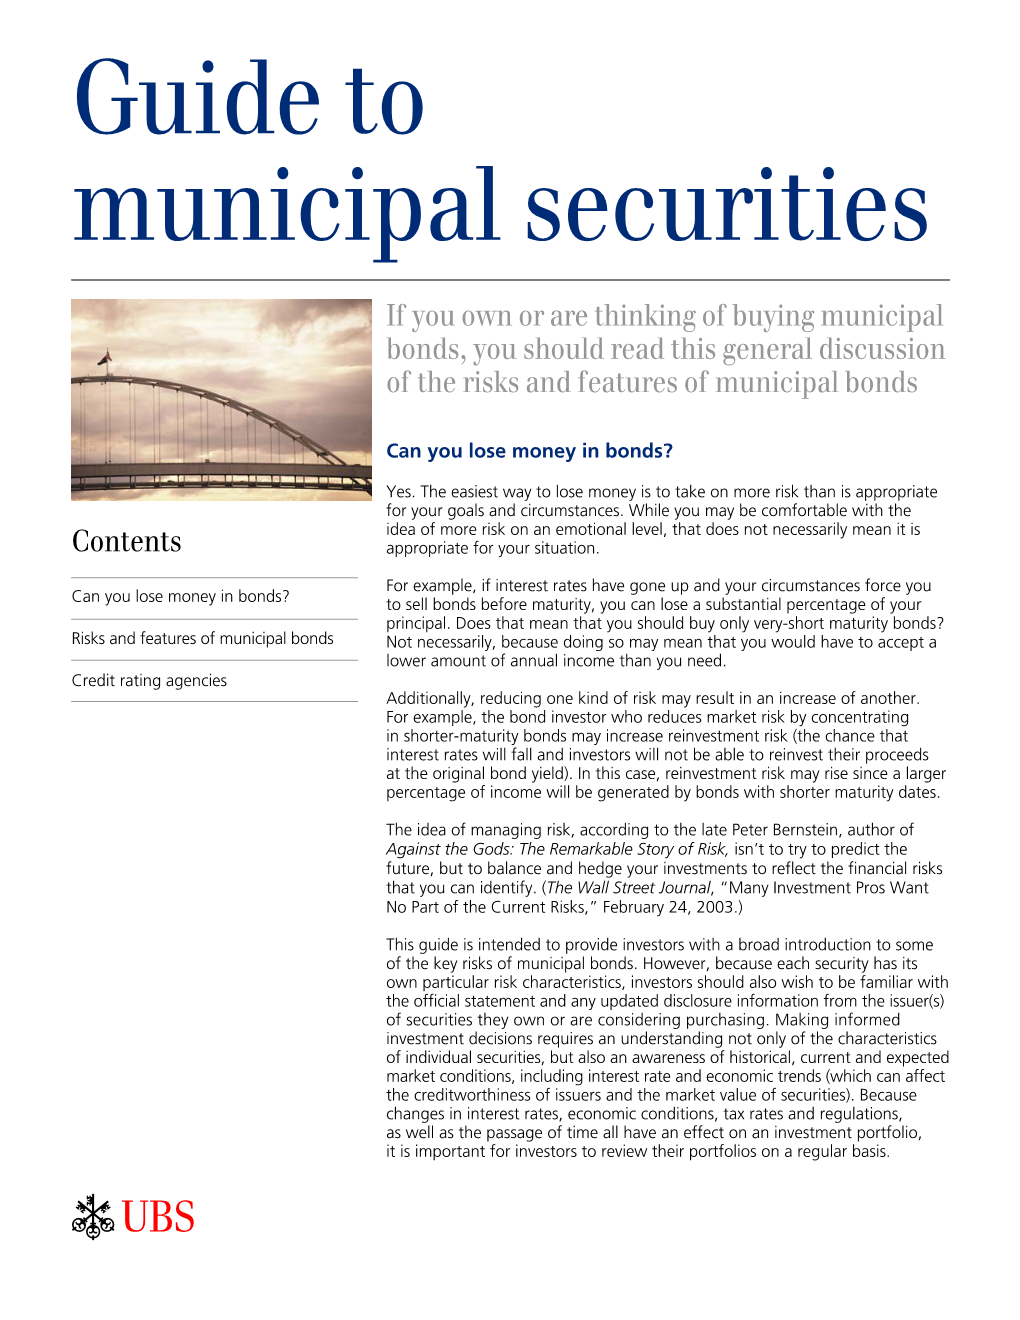 Guide to Municipal Securities